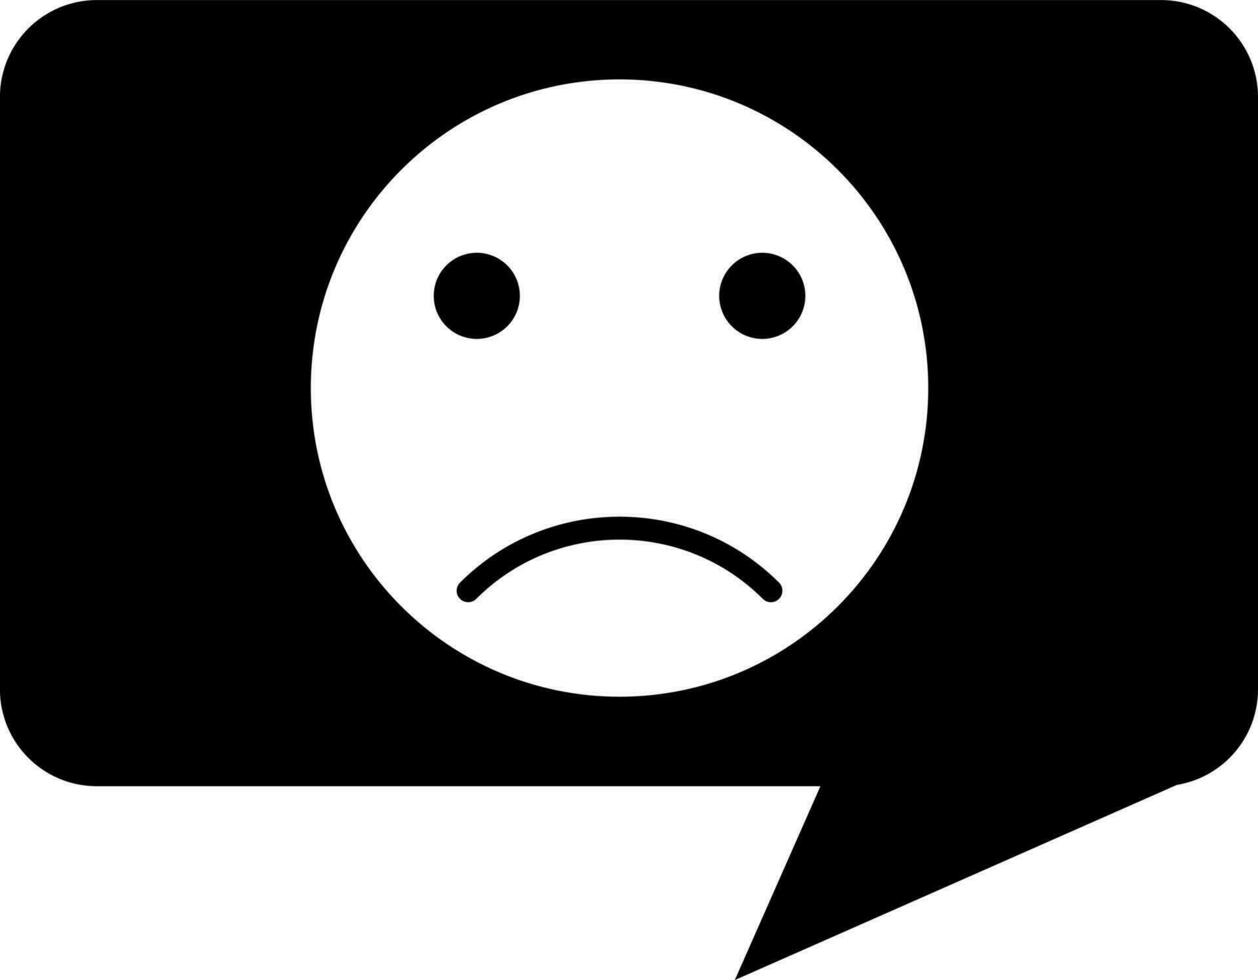 Sad emoji speech bubble or bad review icon. vector